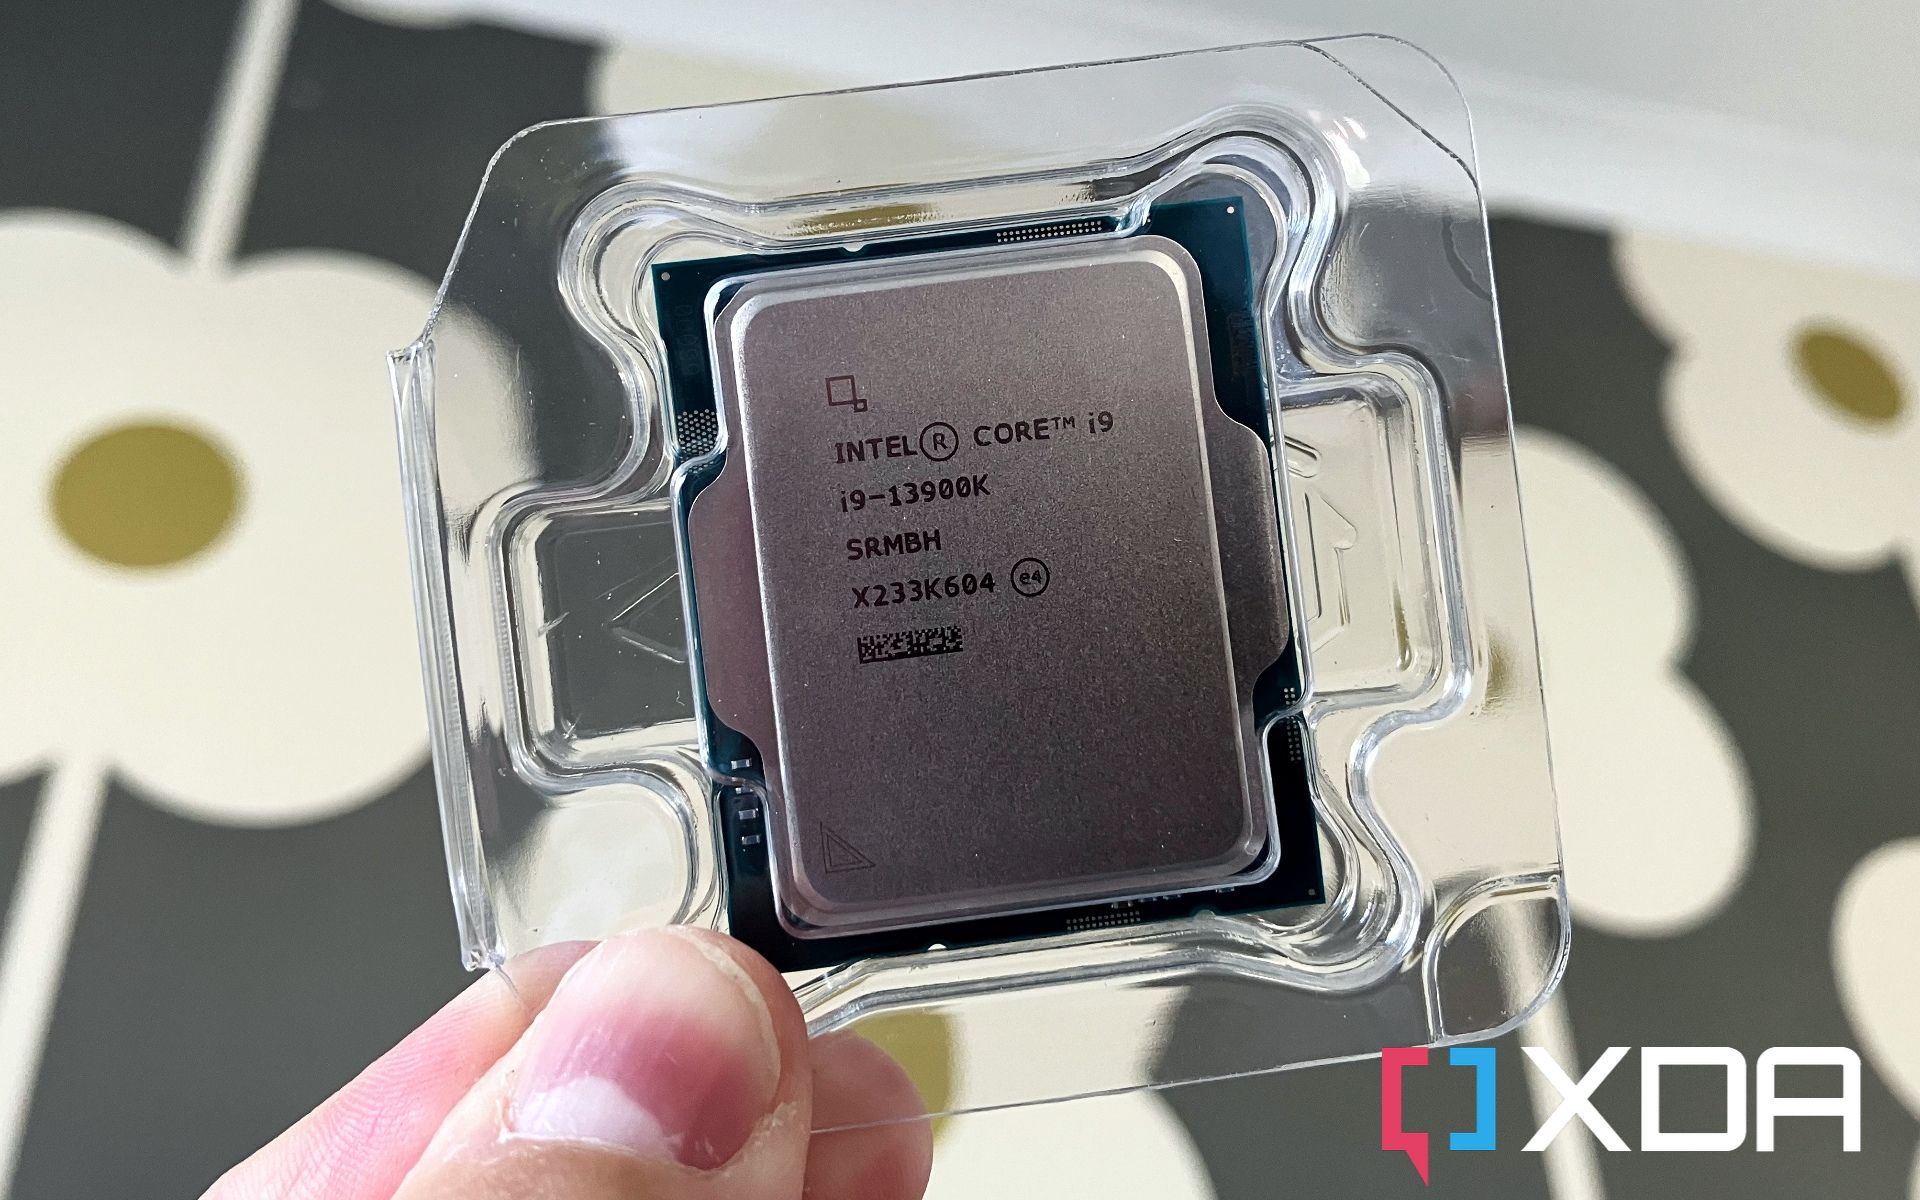 Intel Core i9-13900k